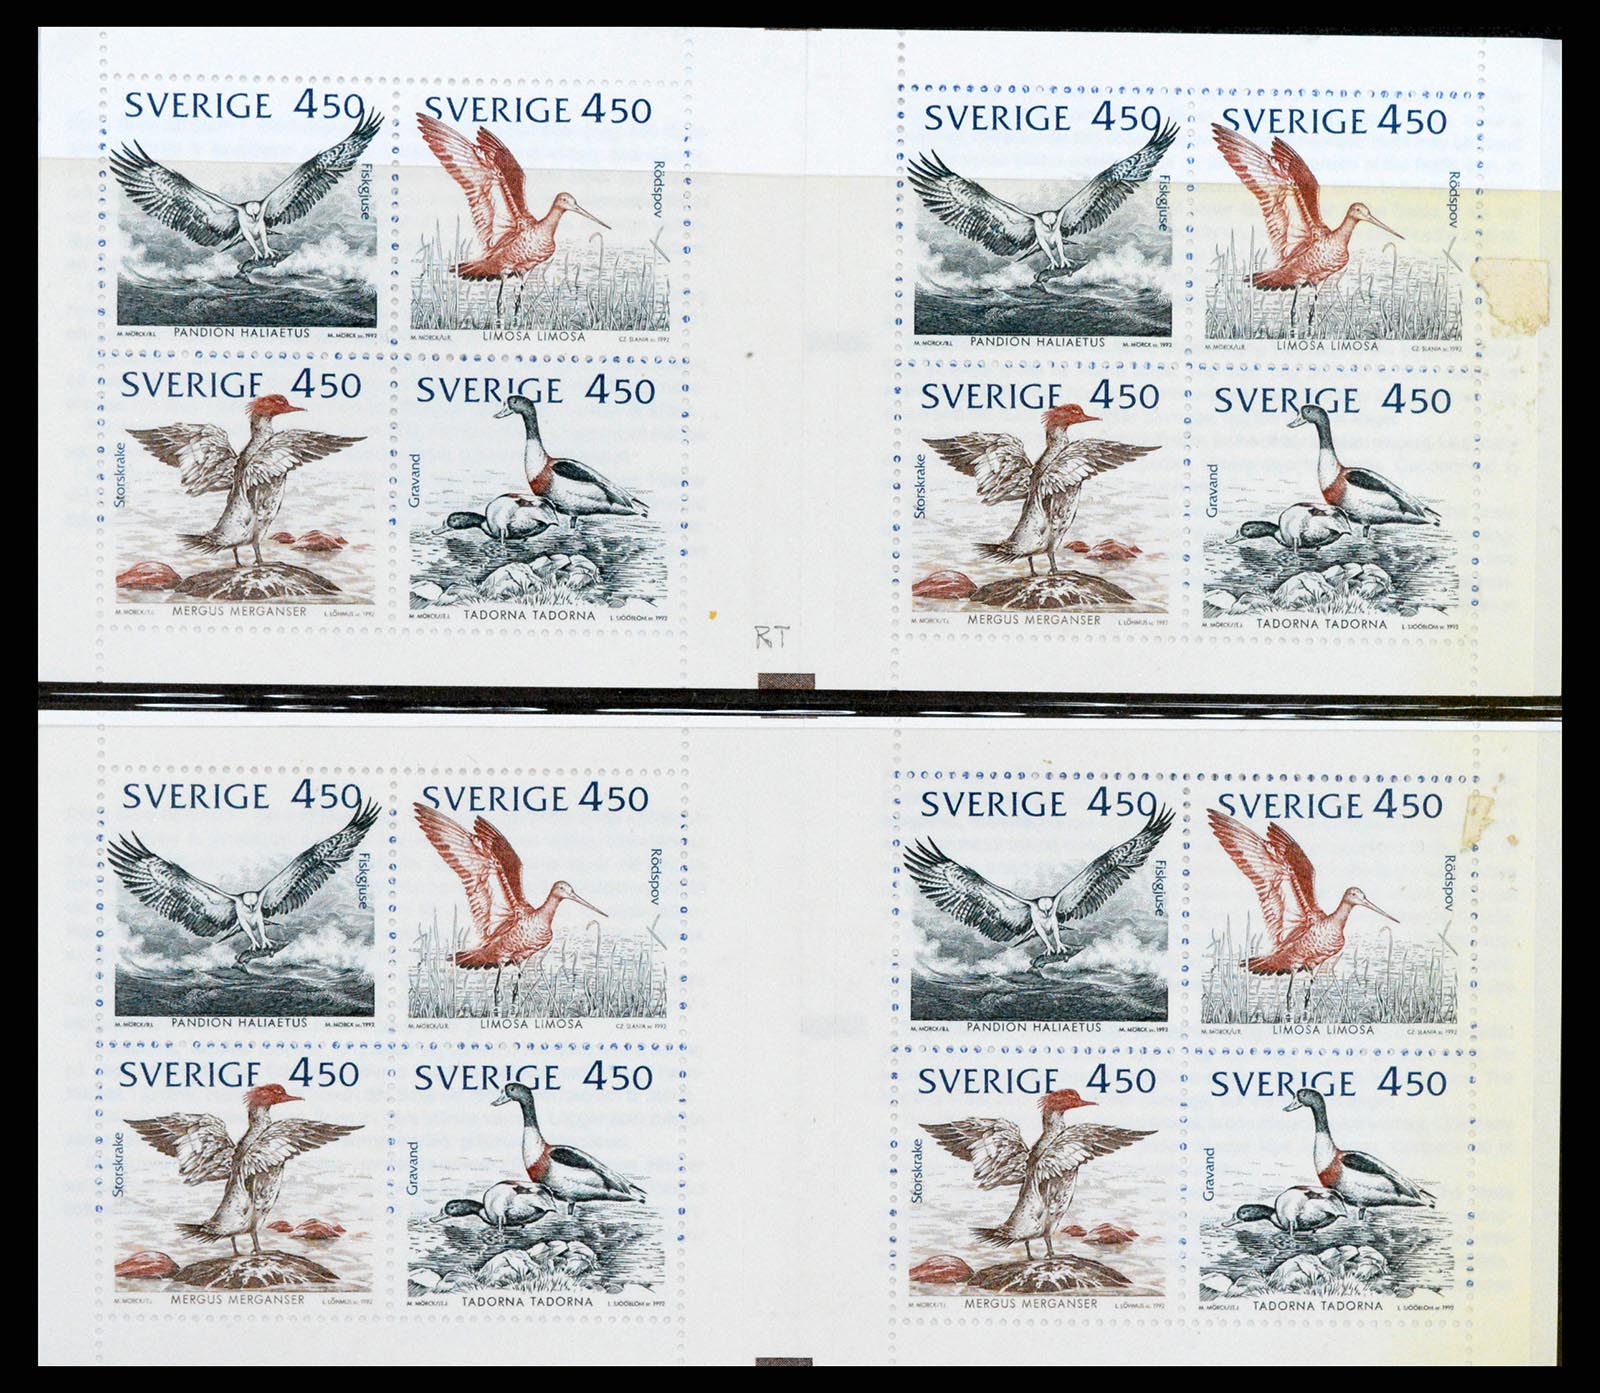 37341 005 - Stamp collection 37341 Sweden stamp booklets.